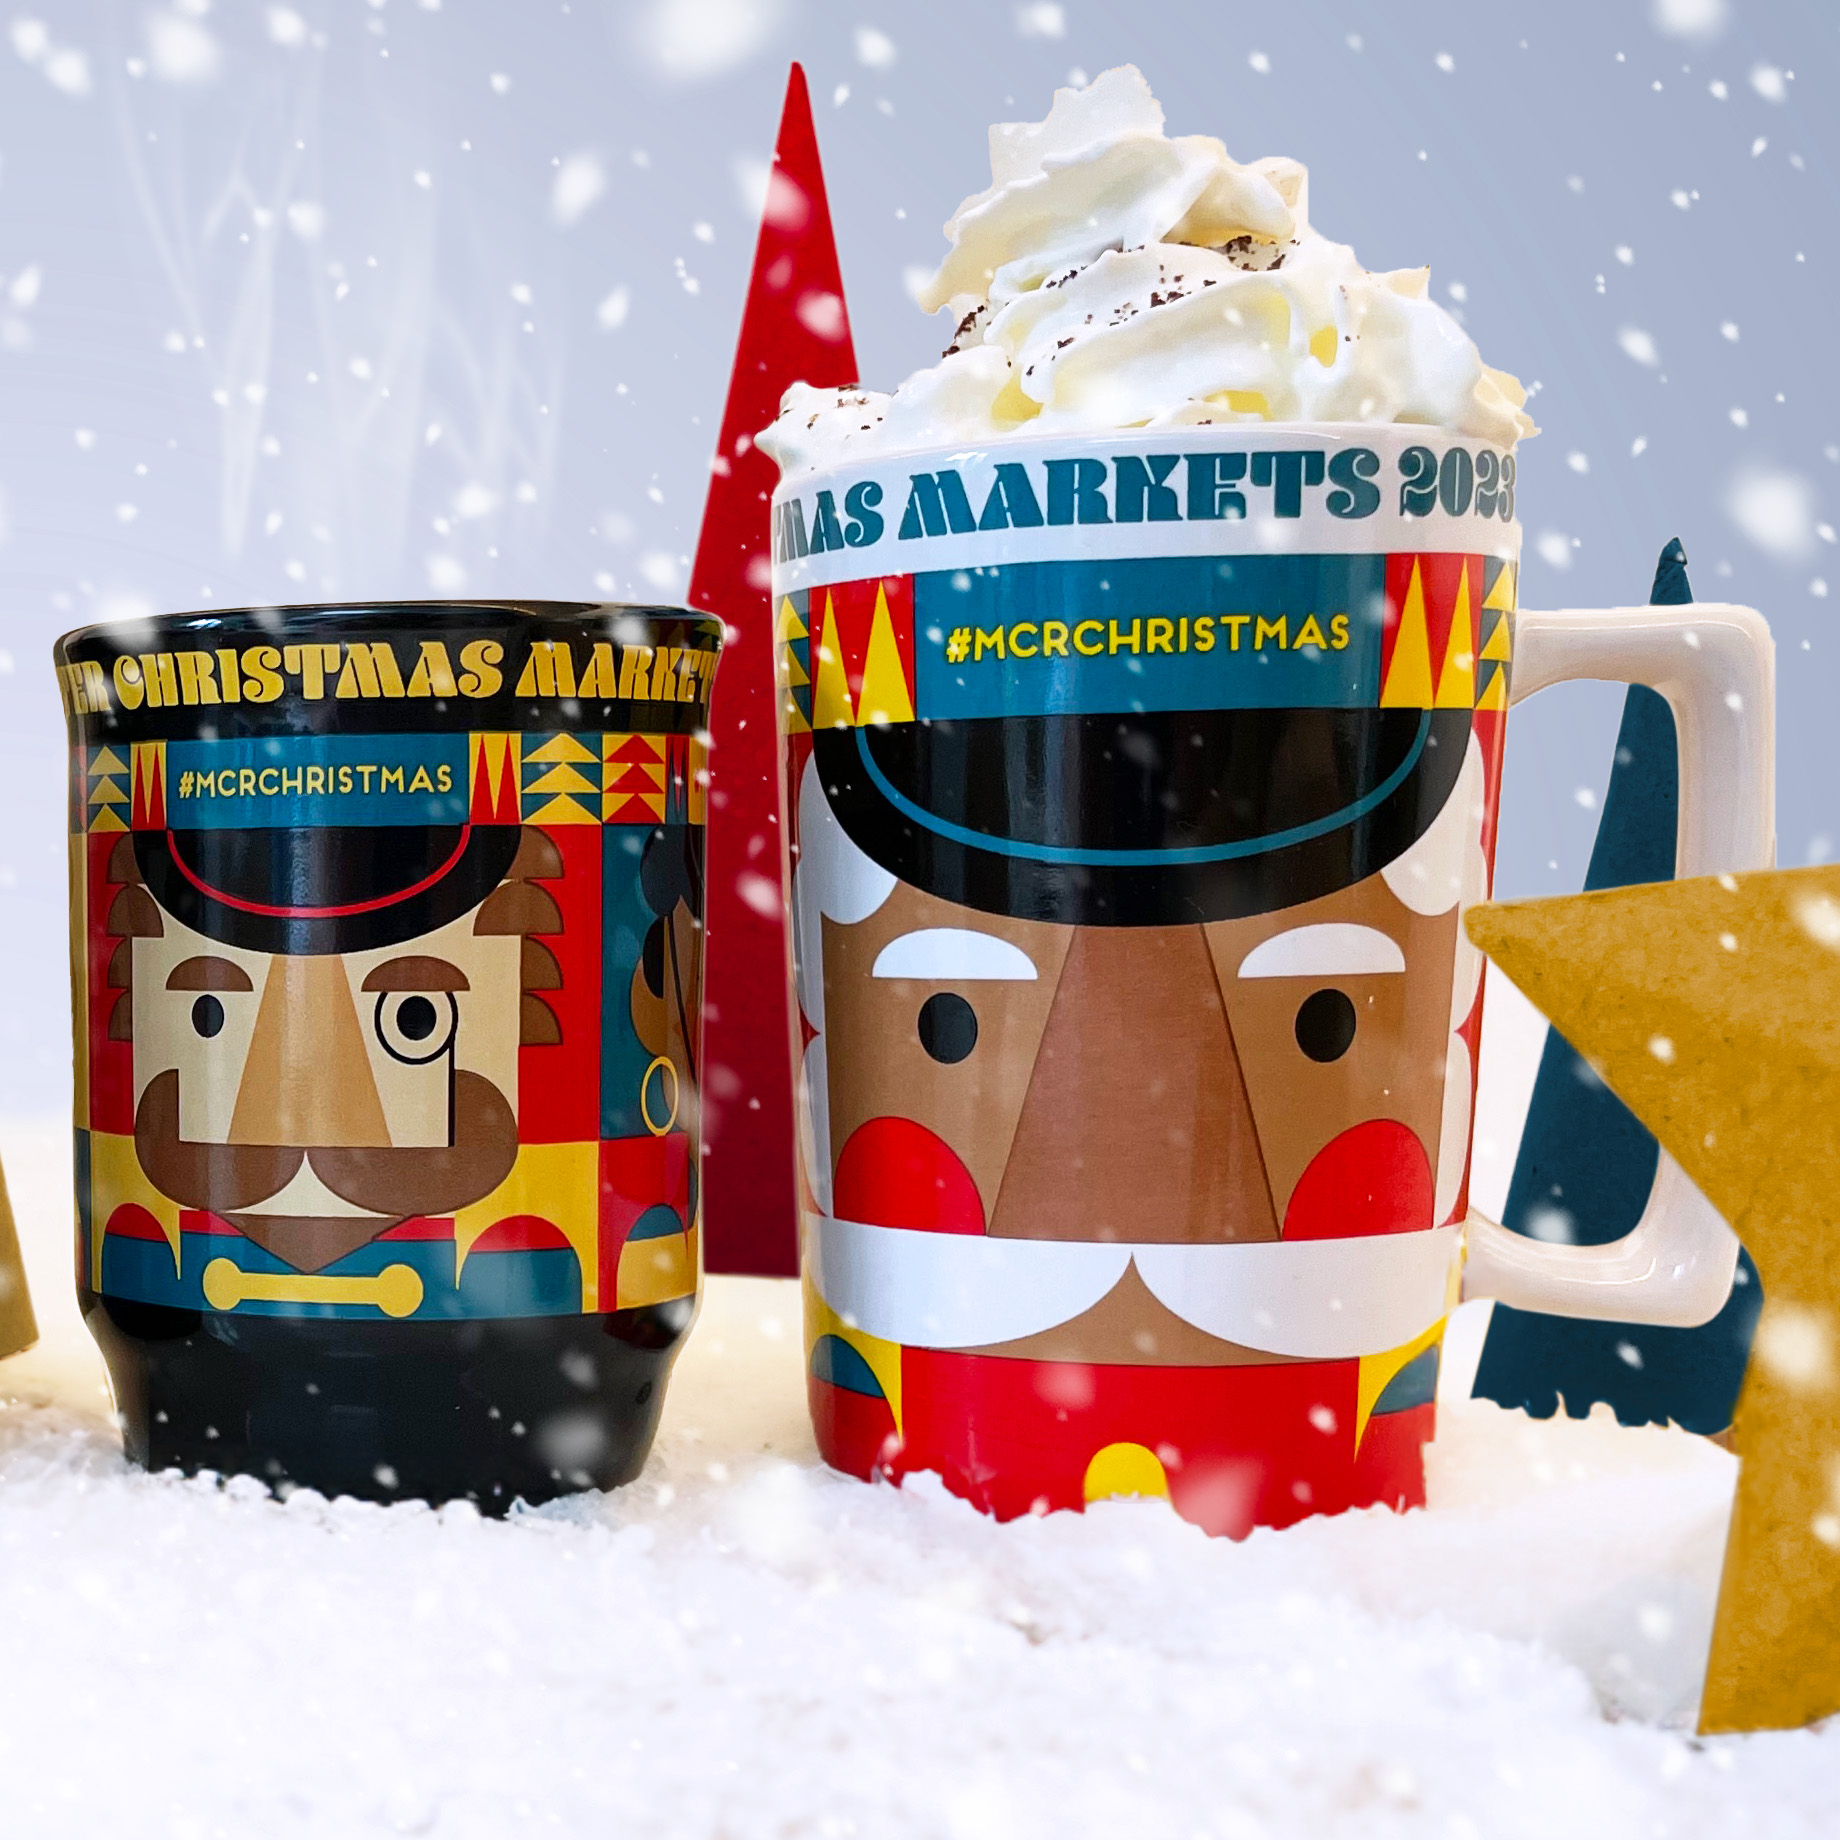 The Manchester Christmas Markets mug design for 2023